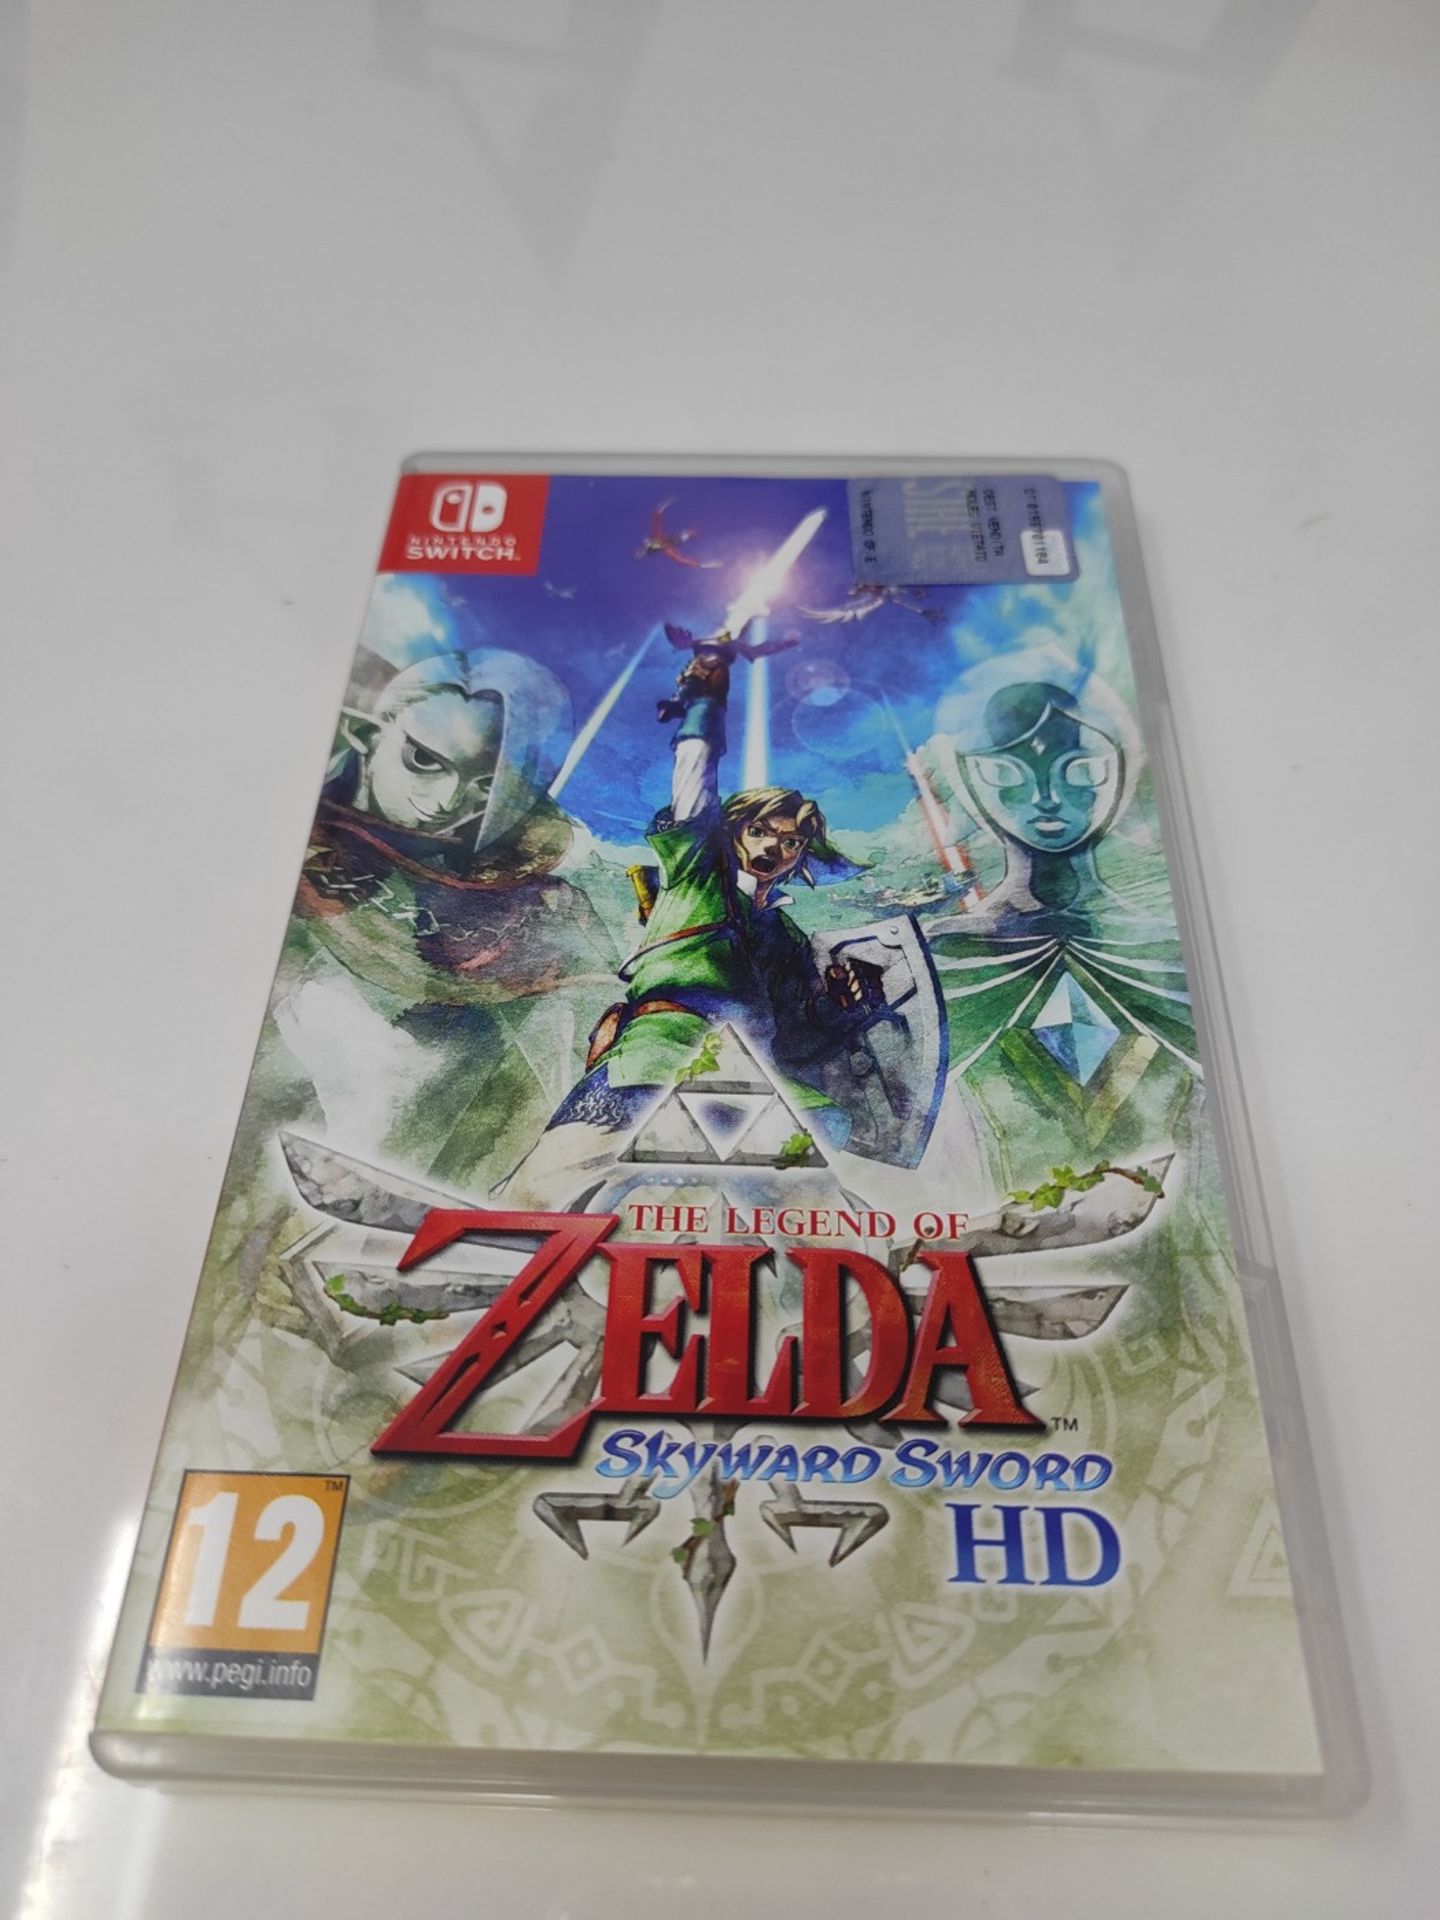 The Legend of Zelda: Skyward Sword - HD - Nintendo Video Game - Italian Edition - Cart - Image 2 of 6